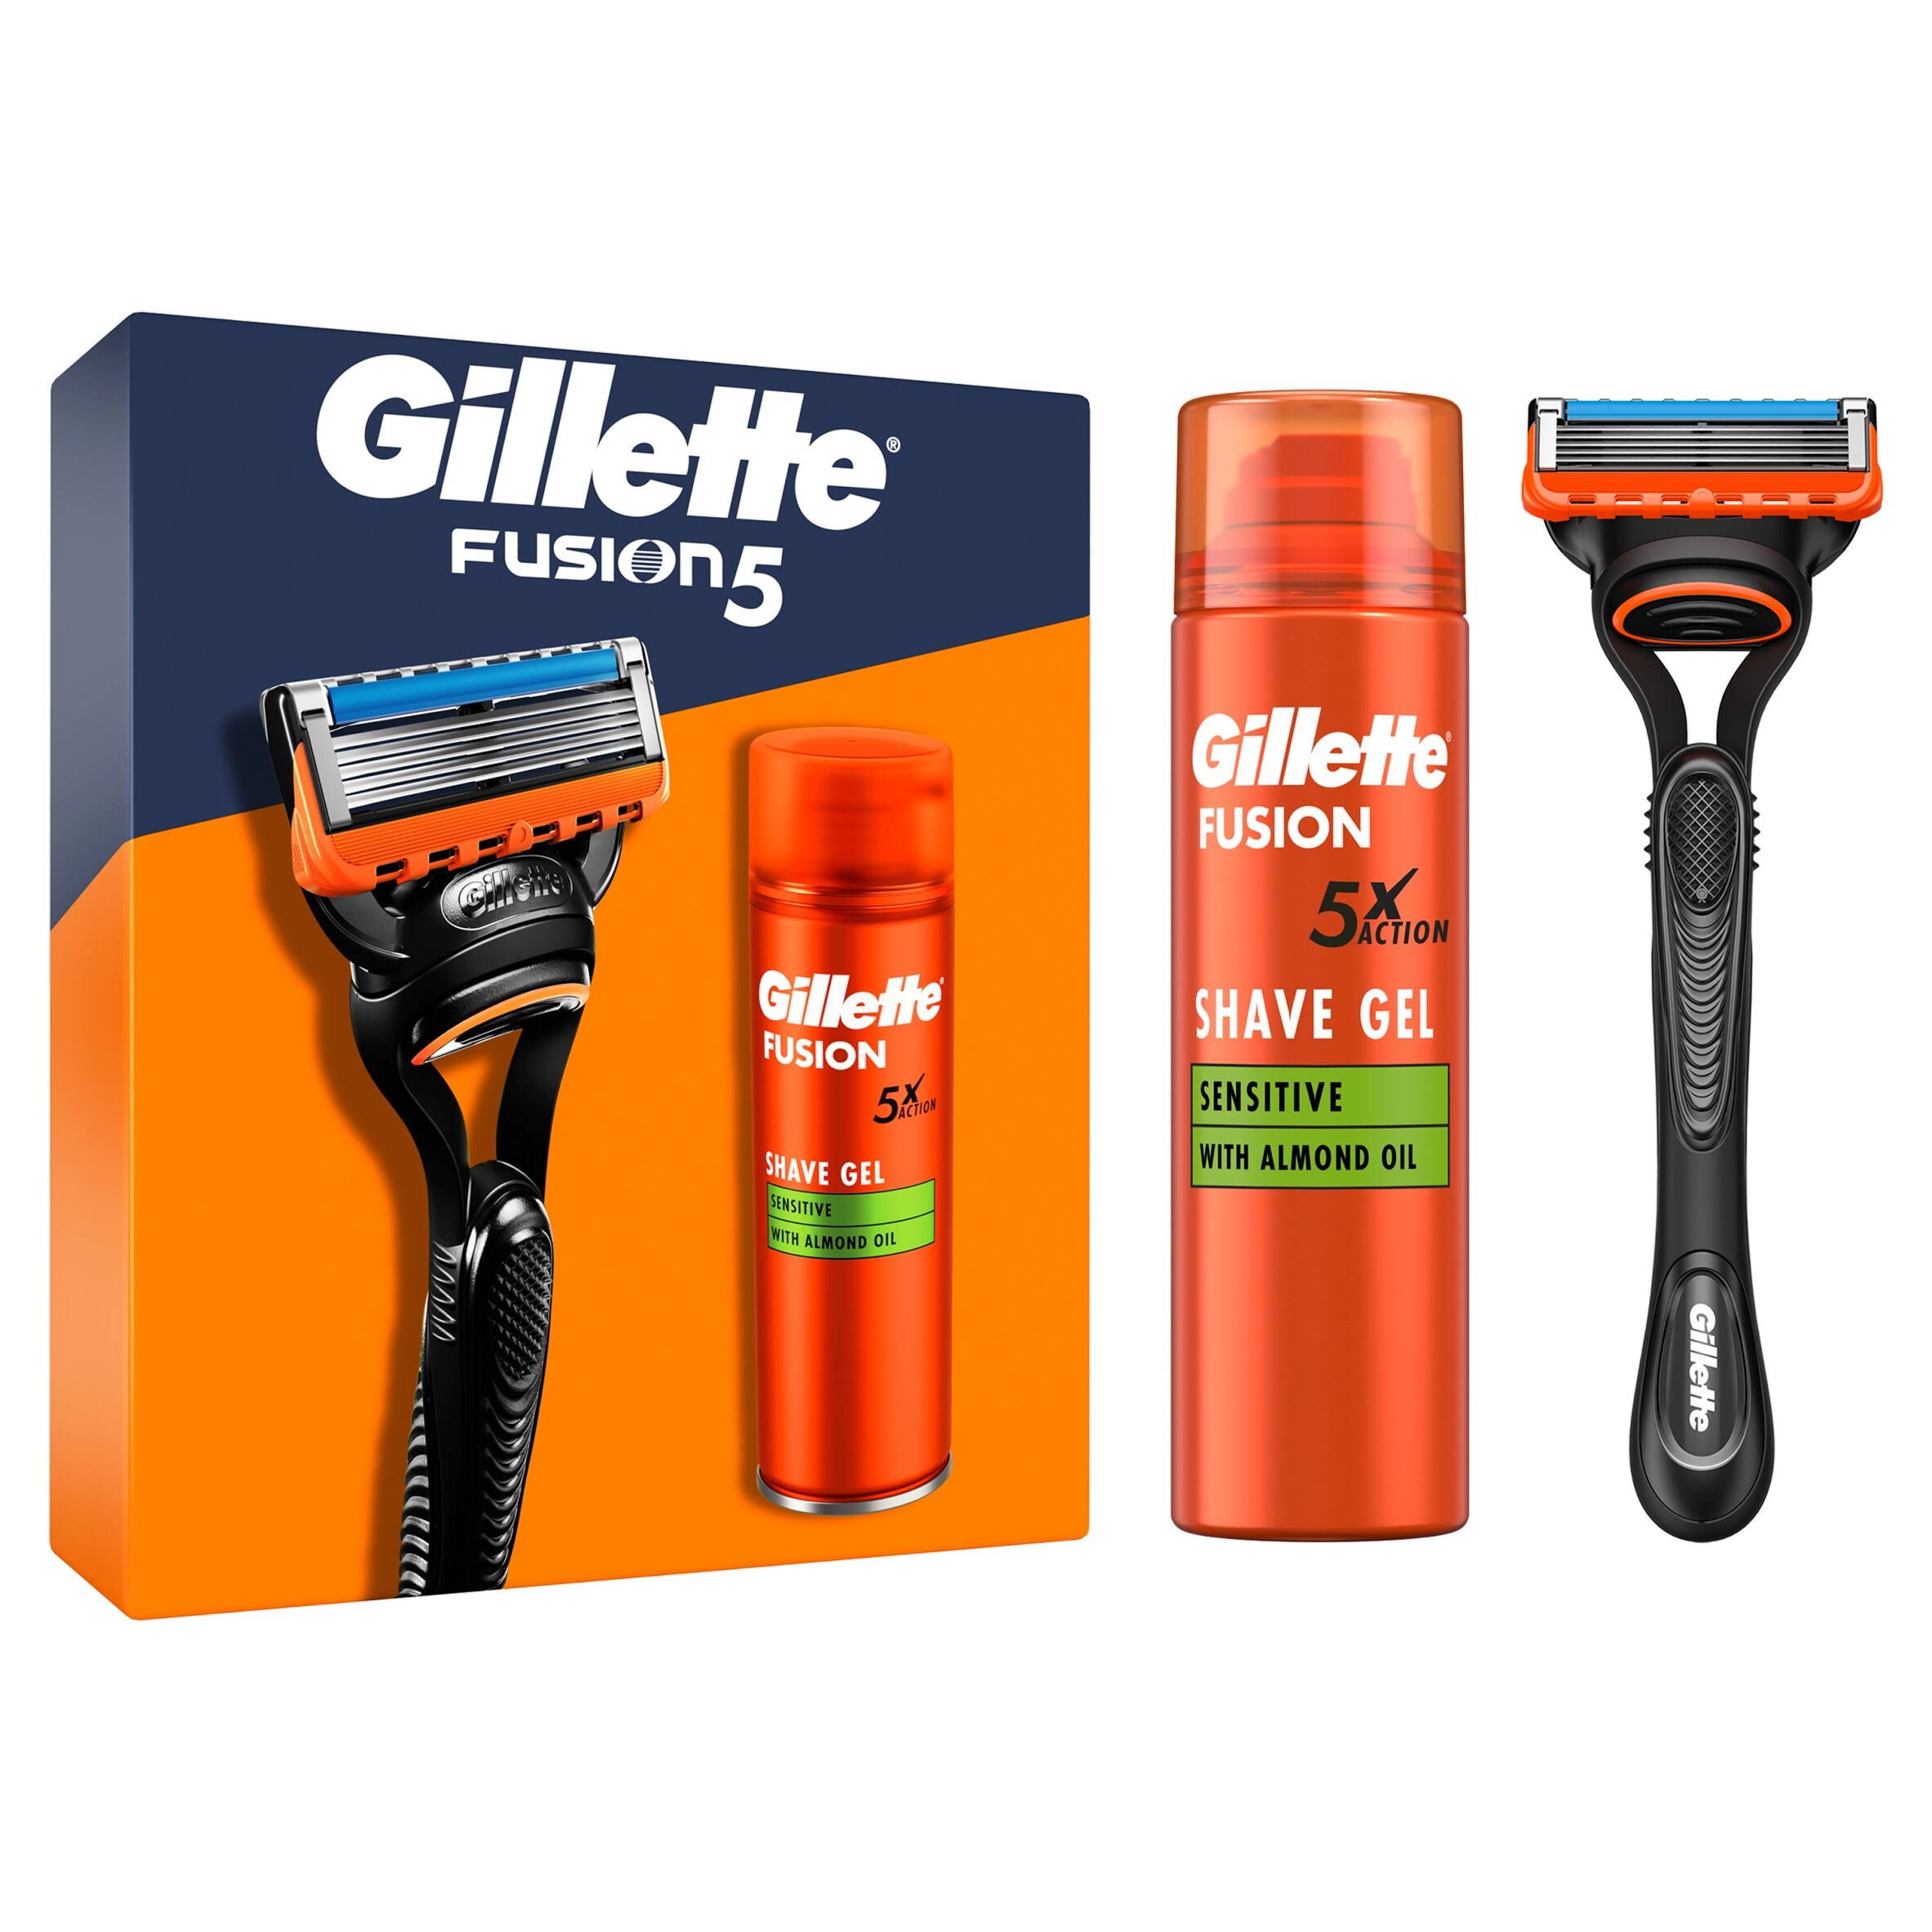 Gillette Fusion 5 Razor Gift Set